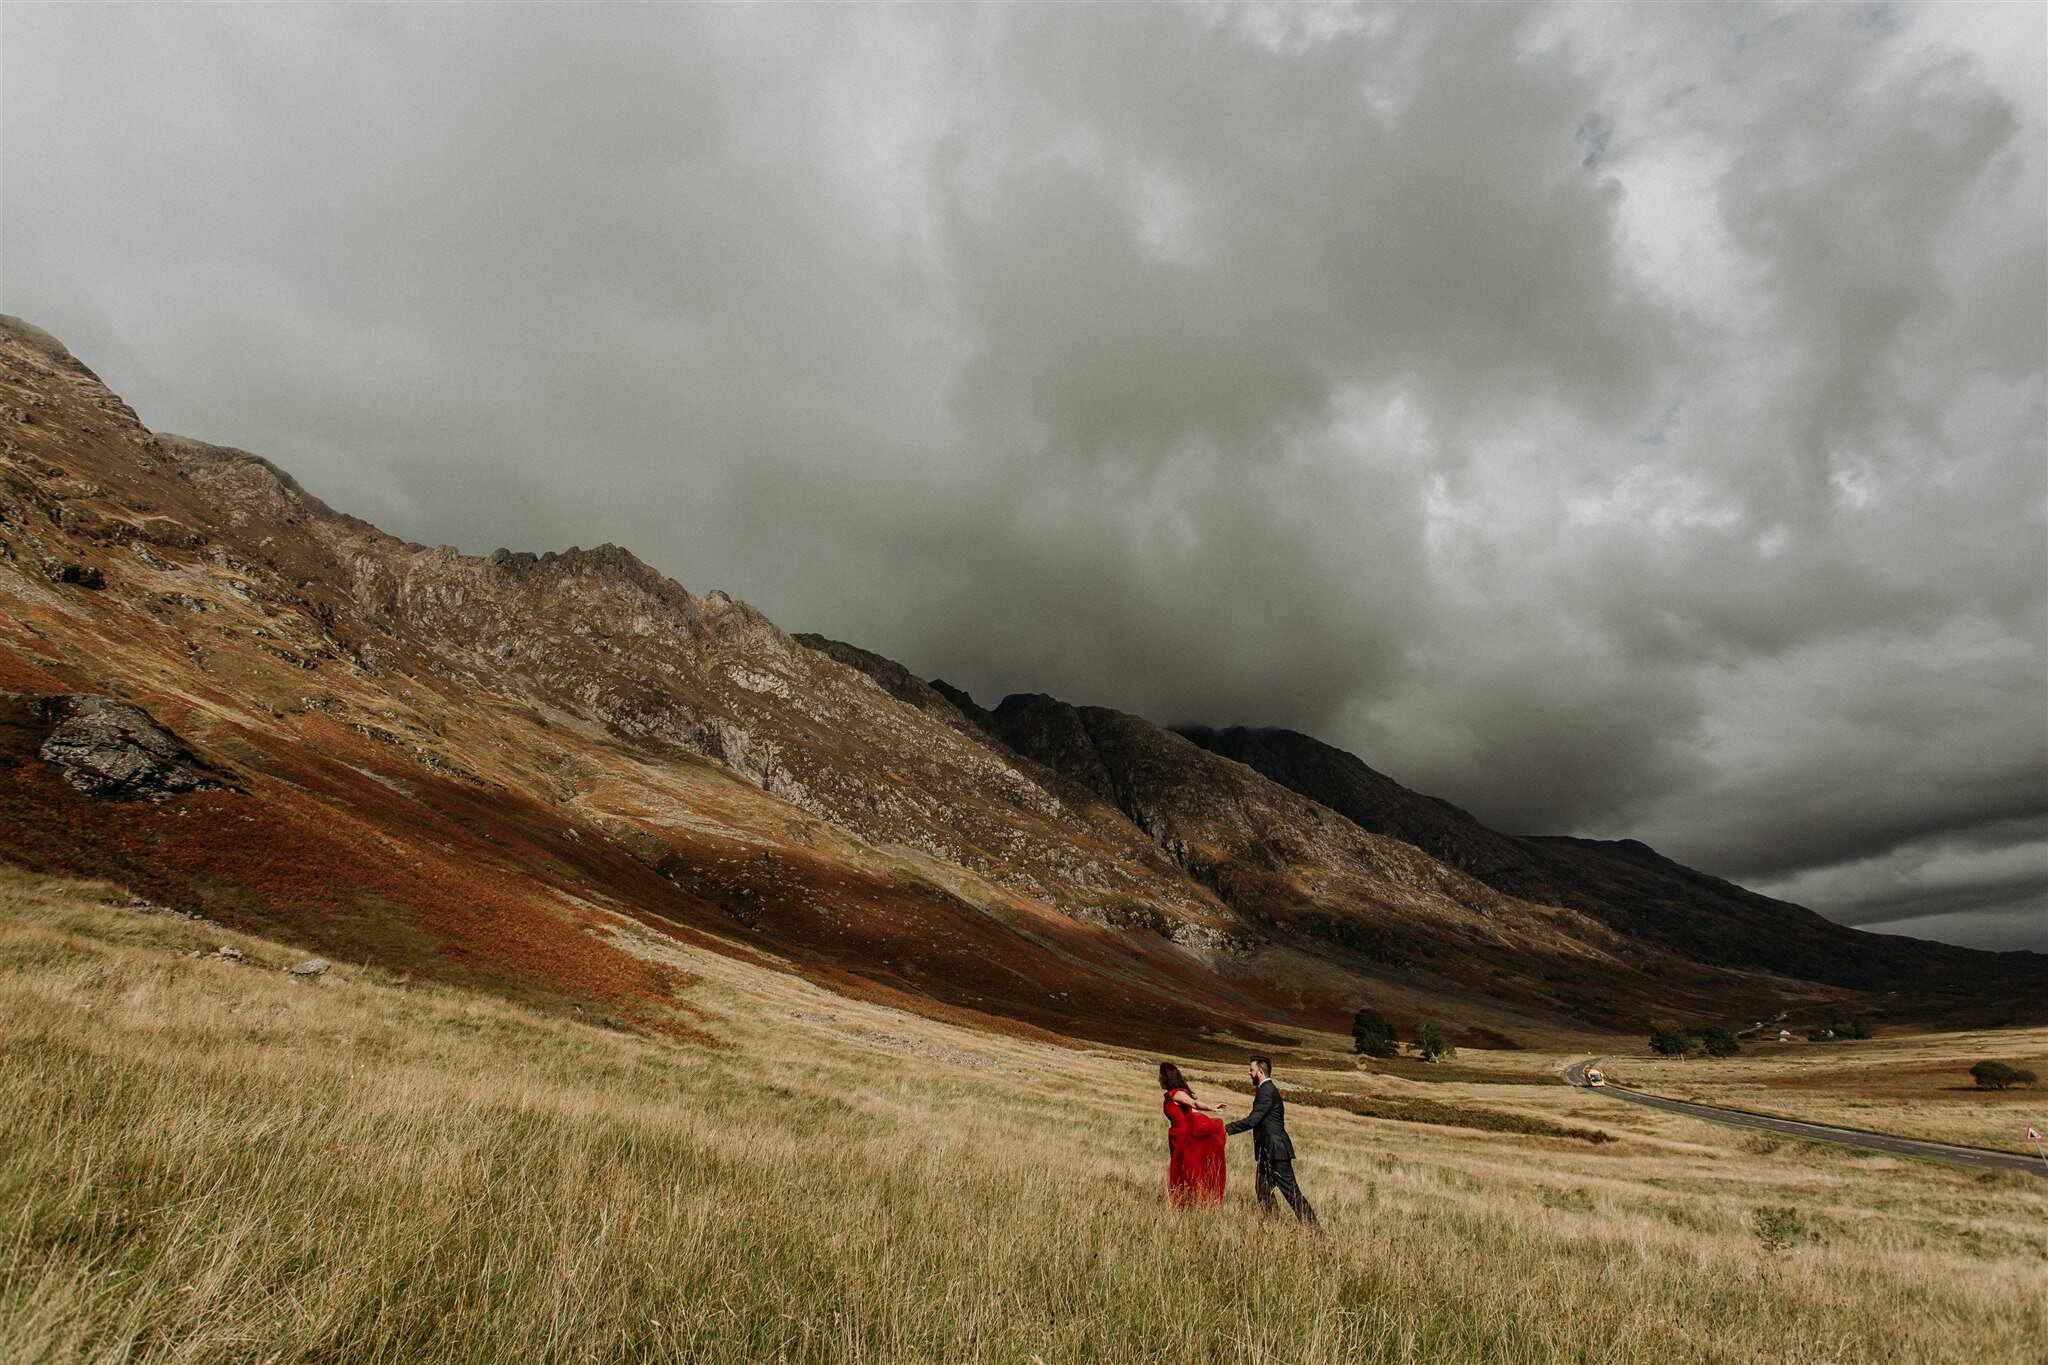 Glen Coe Scotland elopement. Bride in red dress and her groom walking through a field in the Scottish Highlands | Adventure elopement photographer